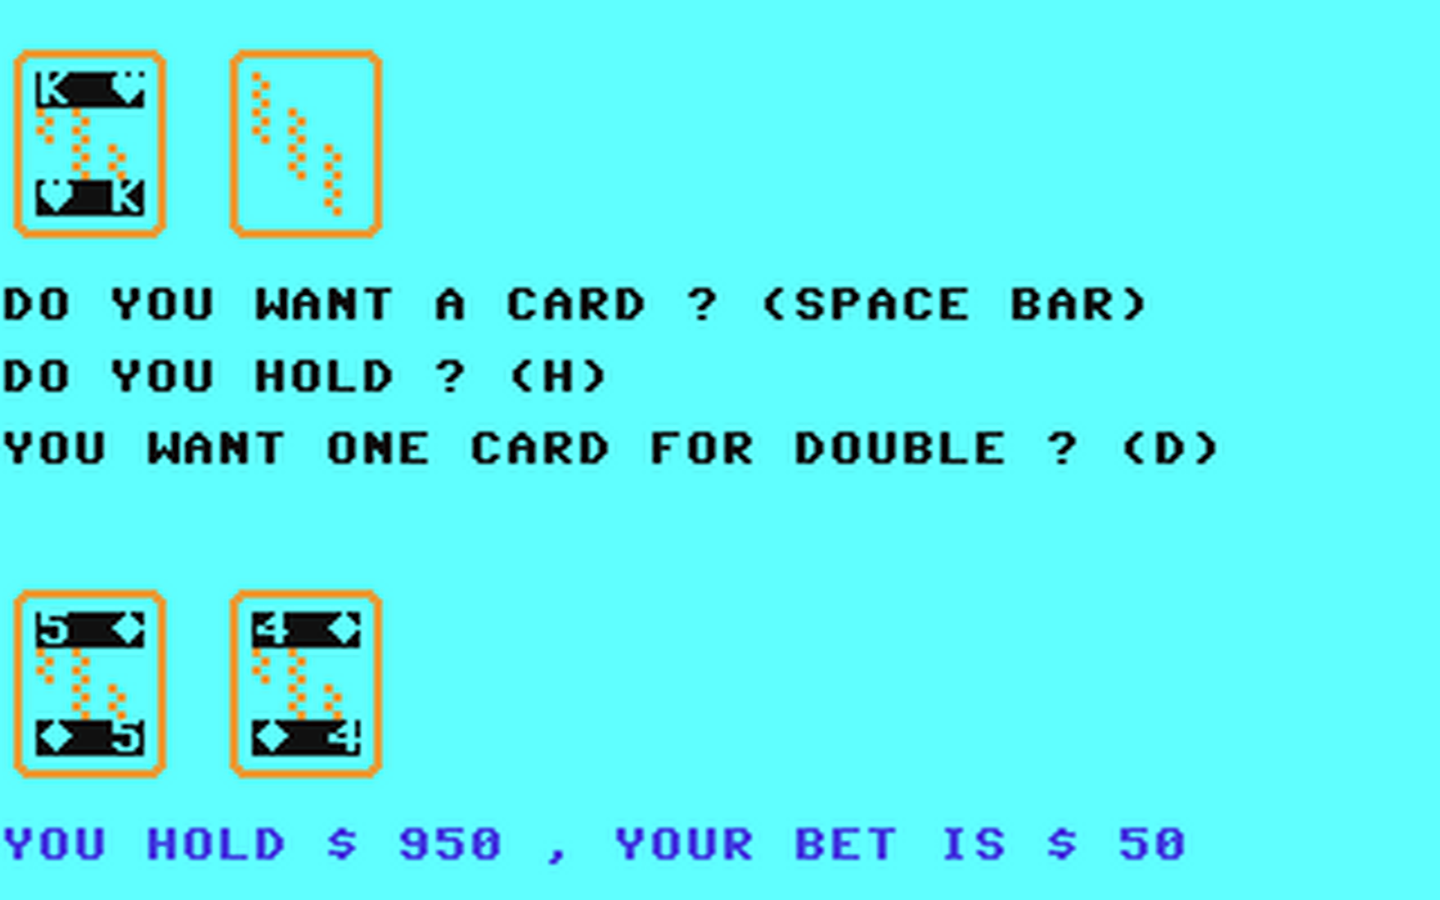 C64 GameBase Blackjack ShareData,_Inc./Green_Valley_Publishing,_Inc. 1985